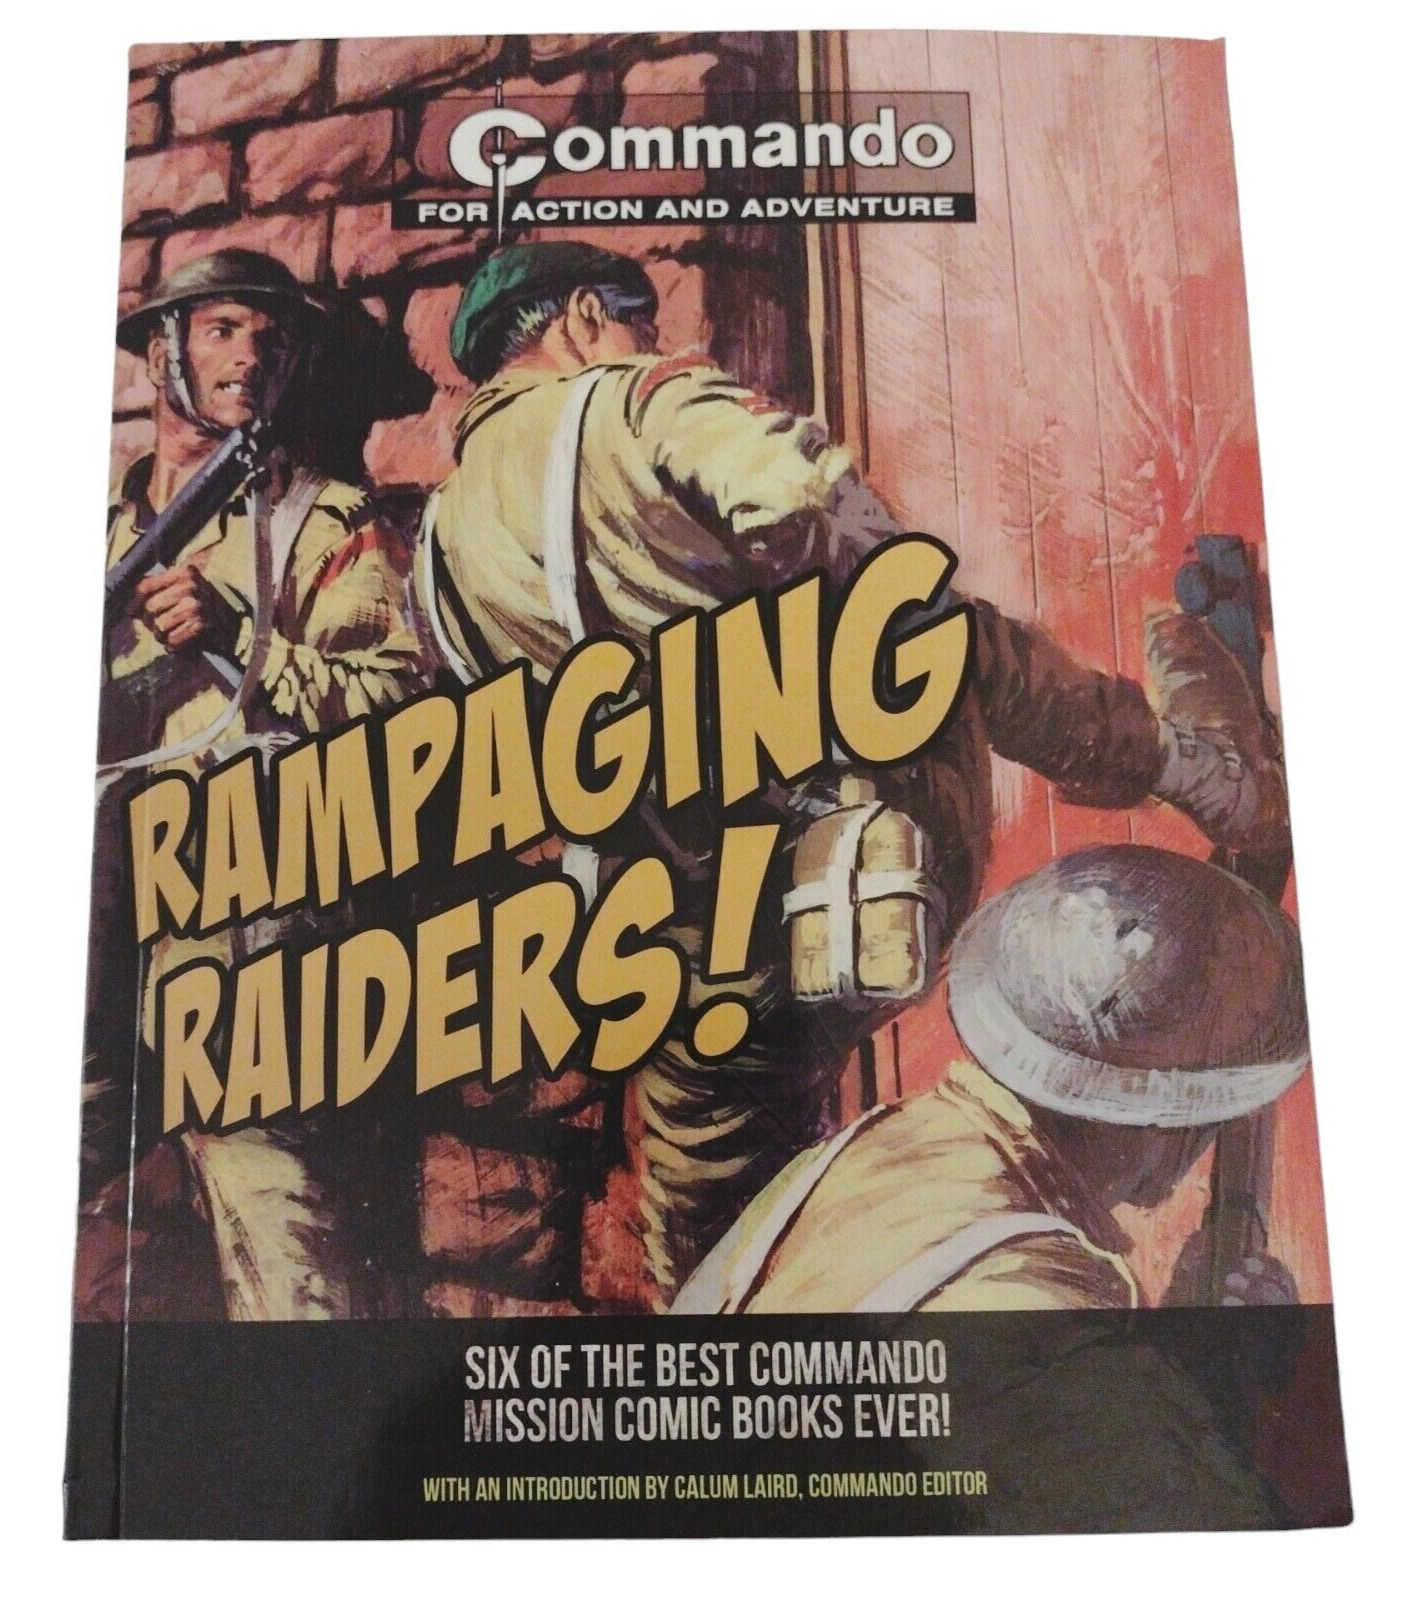 Commando: Rampaging Raiders Paperback by George Low